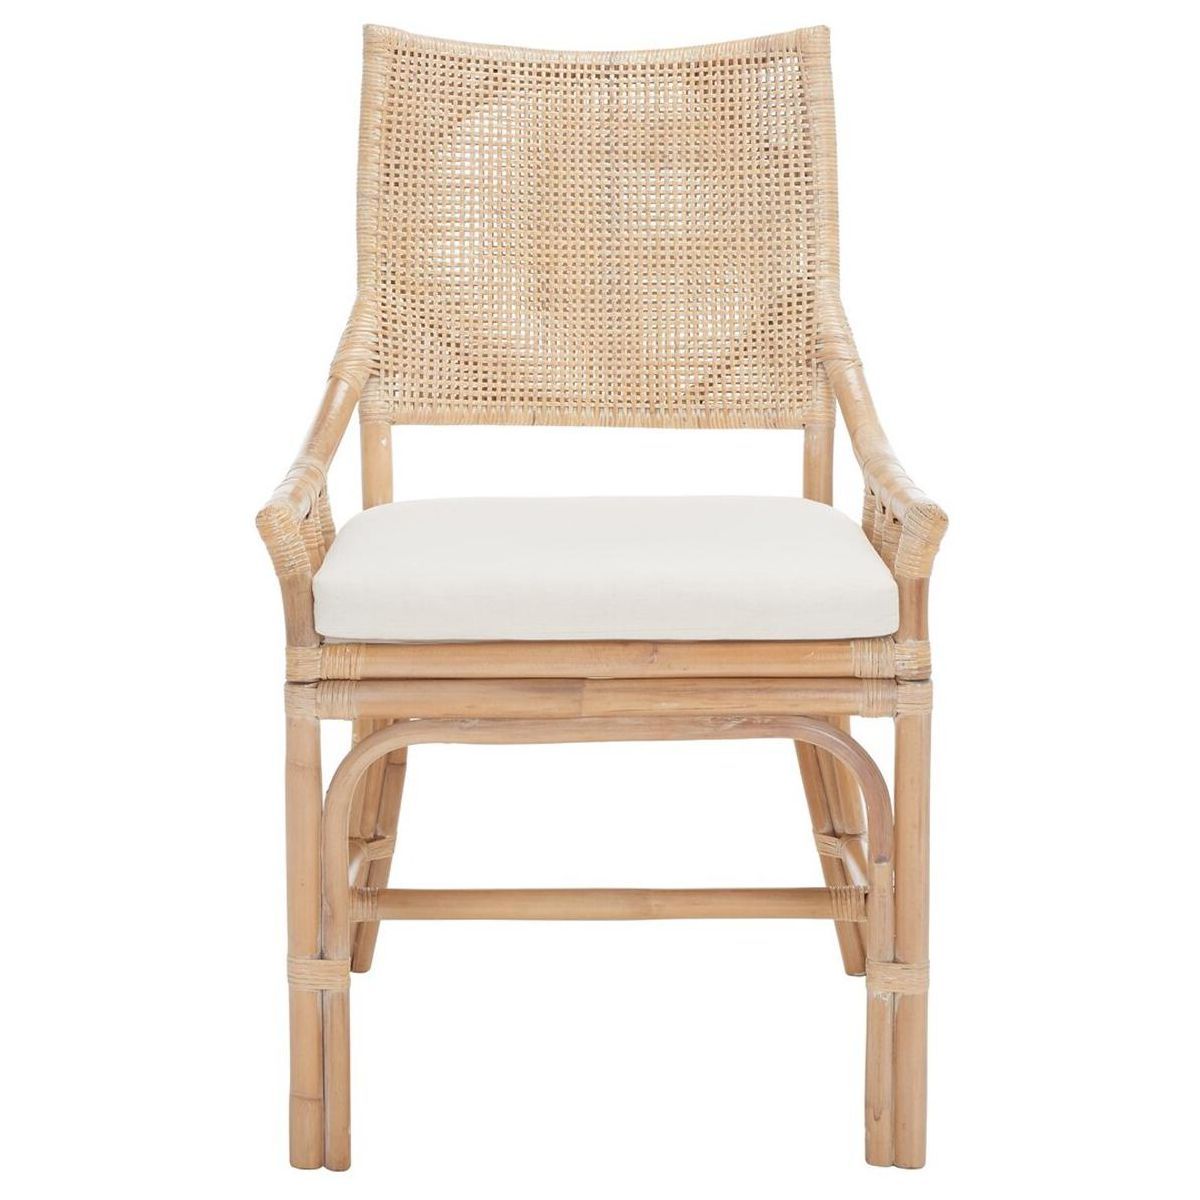 Donatella Rattan Chair - Natural White Wash - Safavieh. | Target